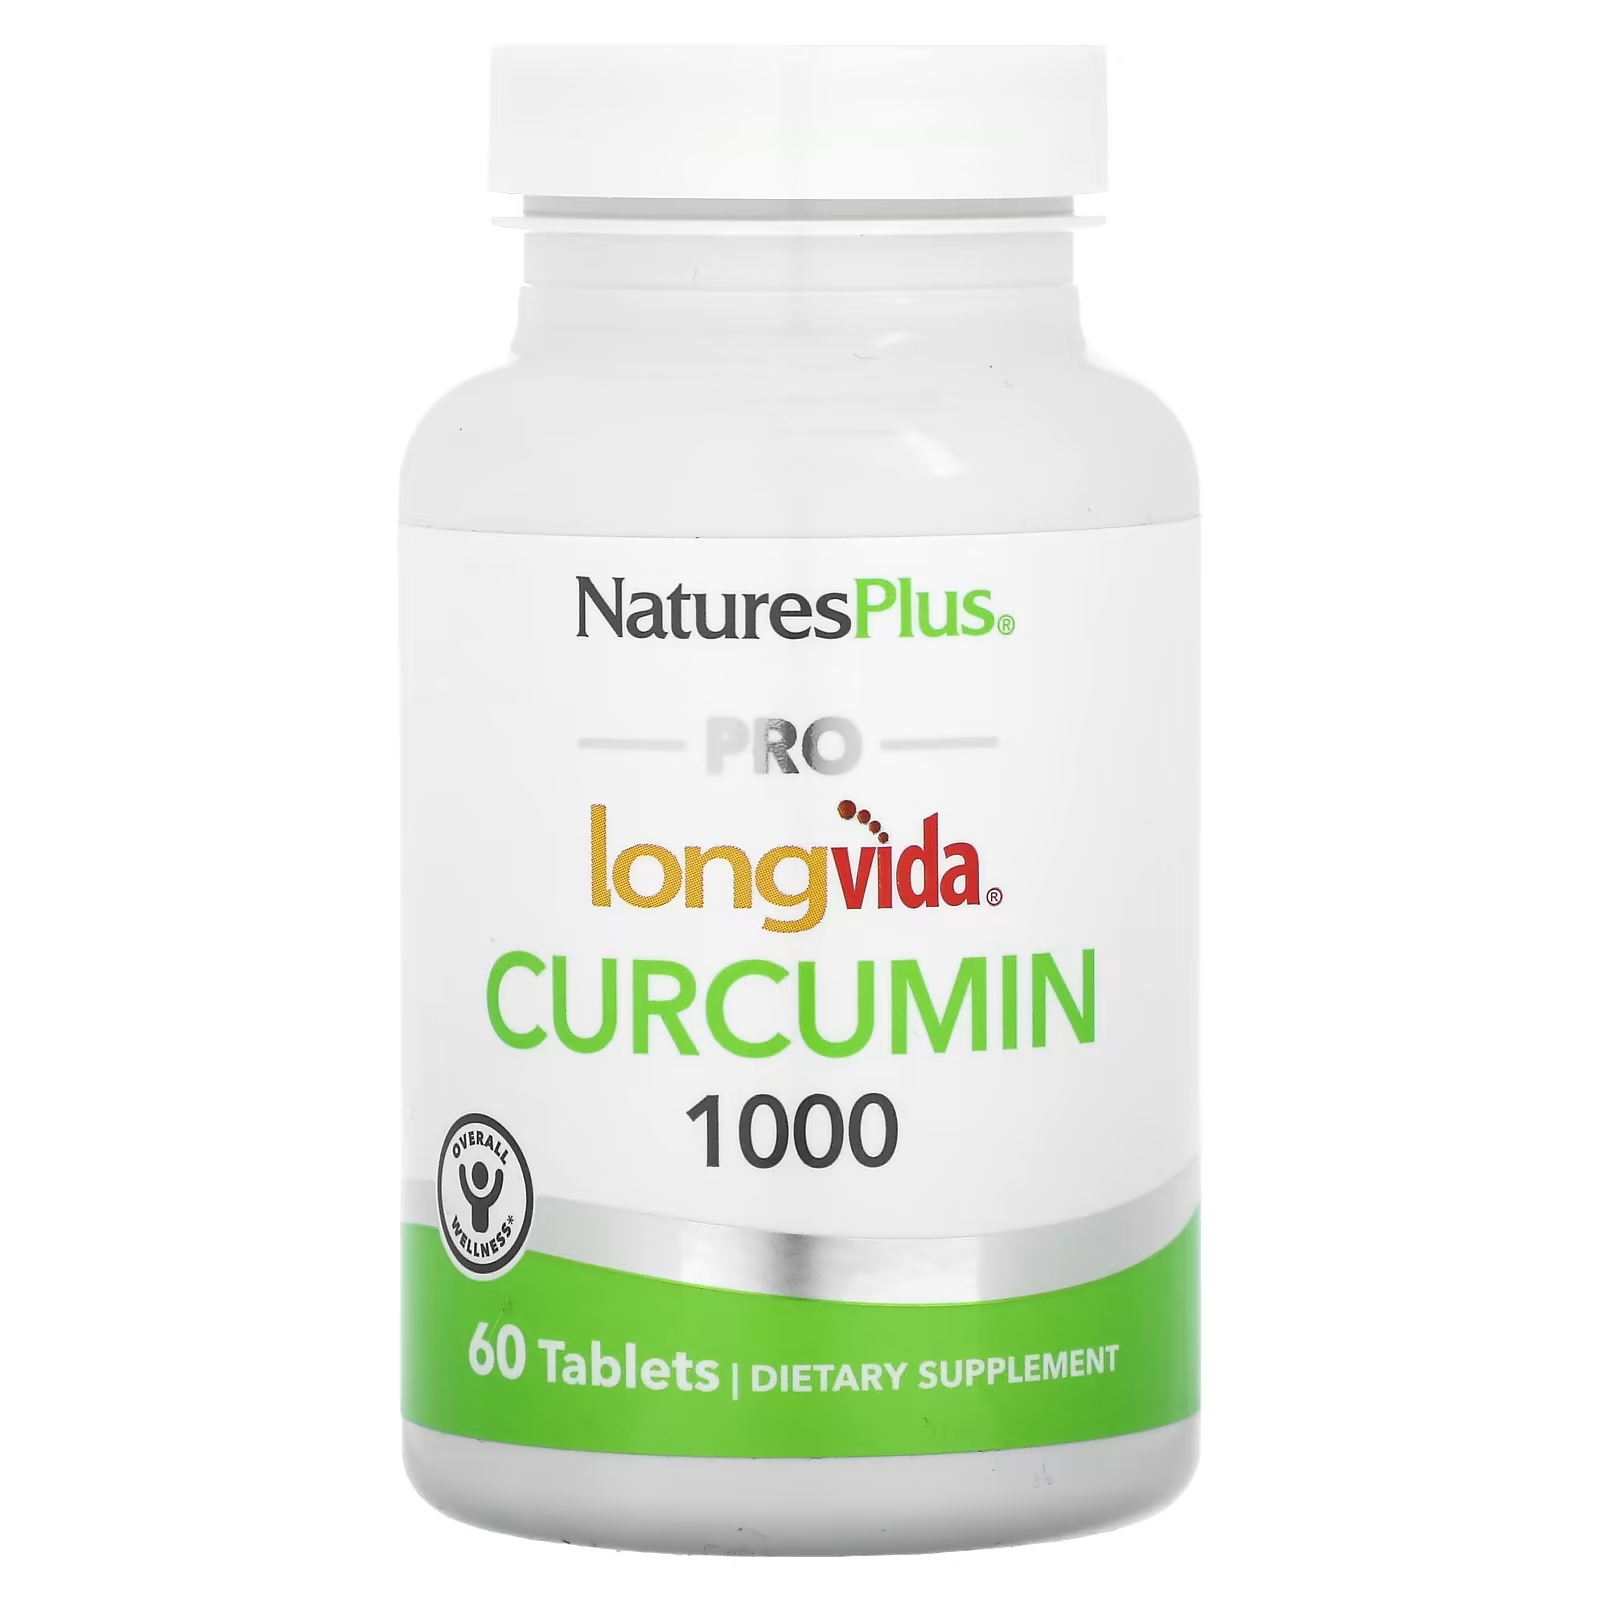 Пищевая добавка, NaturesPlus Pro Longvida Куркумин 1000, 60 таблеток пищевая добавка naturesplus малина 75 шт